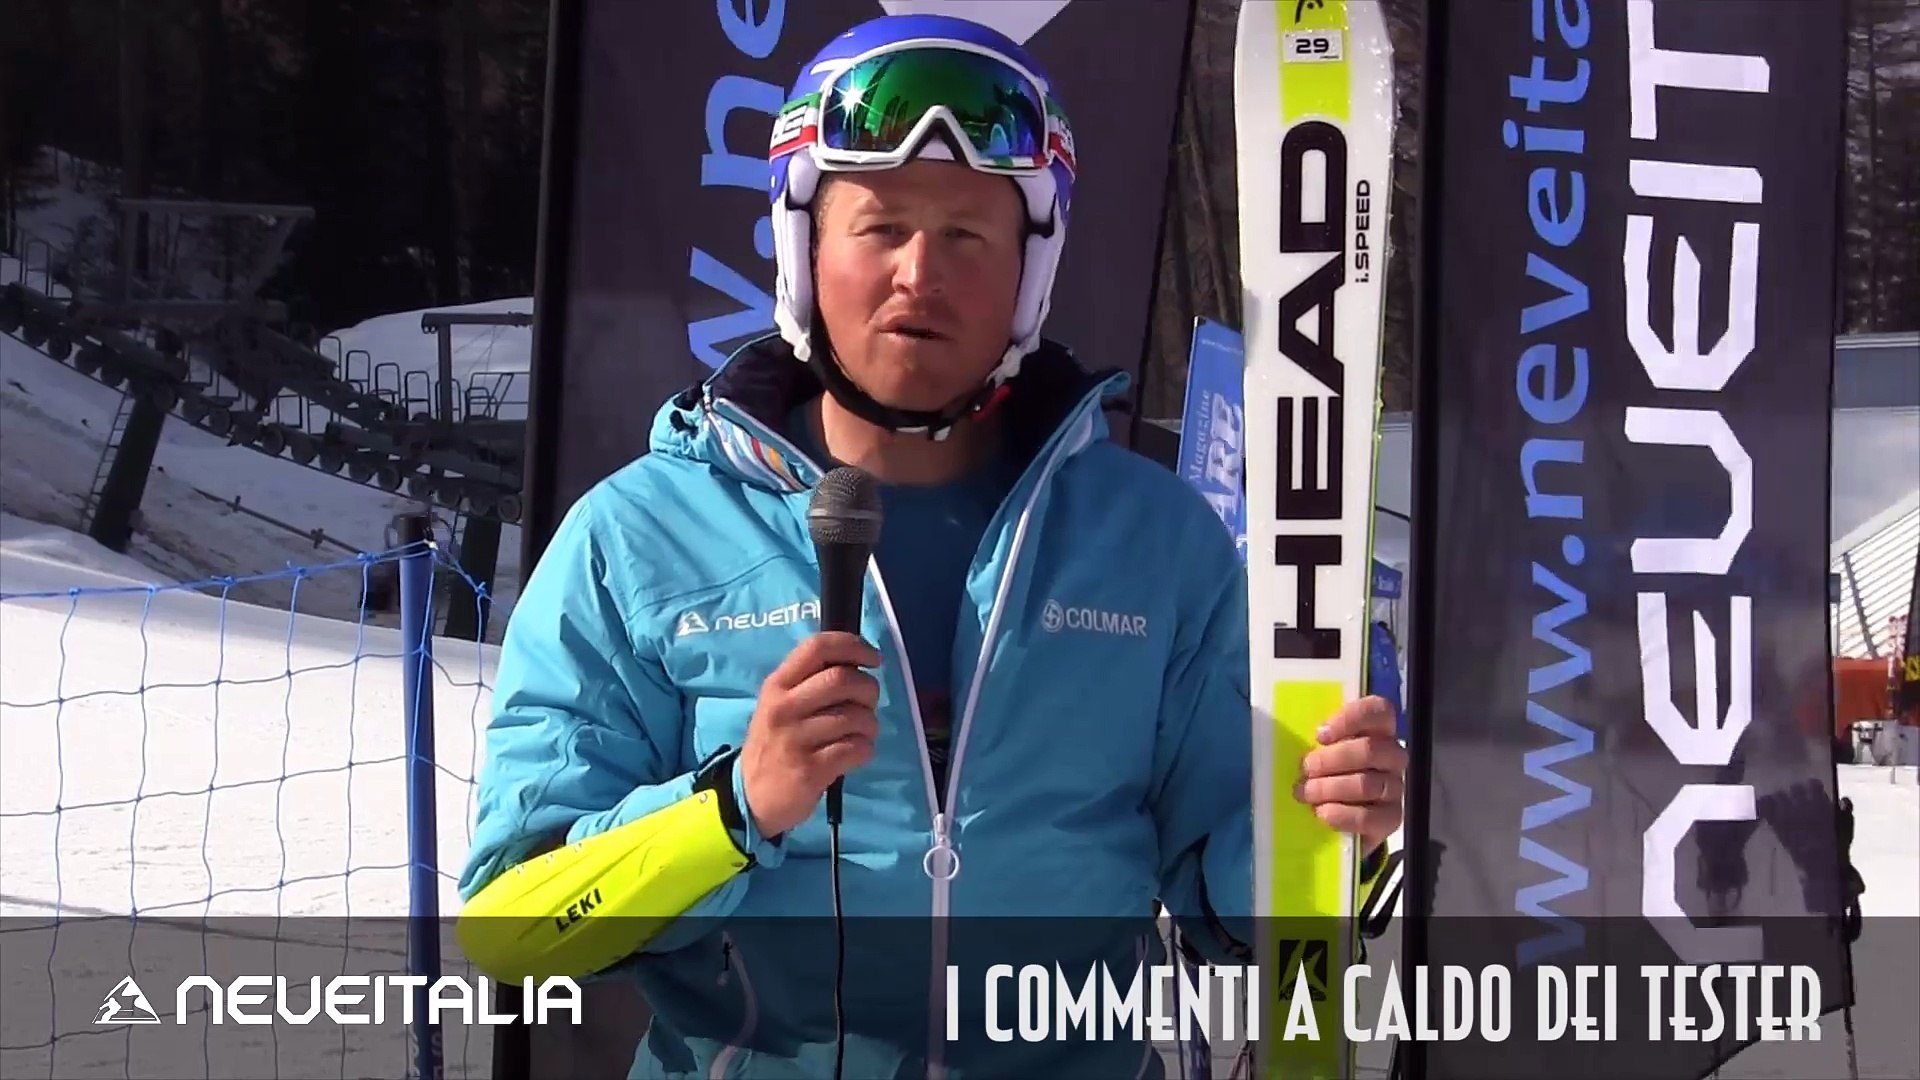 Head iSpeed Worldcup 2015 - Ski-Test Neveitalia 2014-2015 - Video  Dailymotion